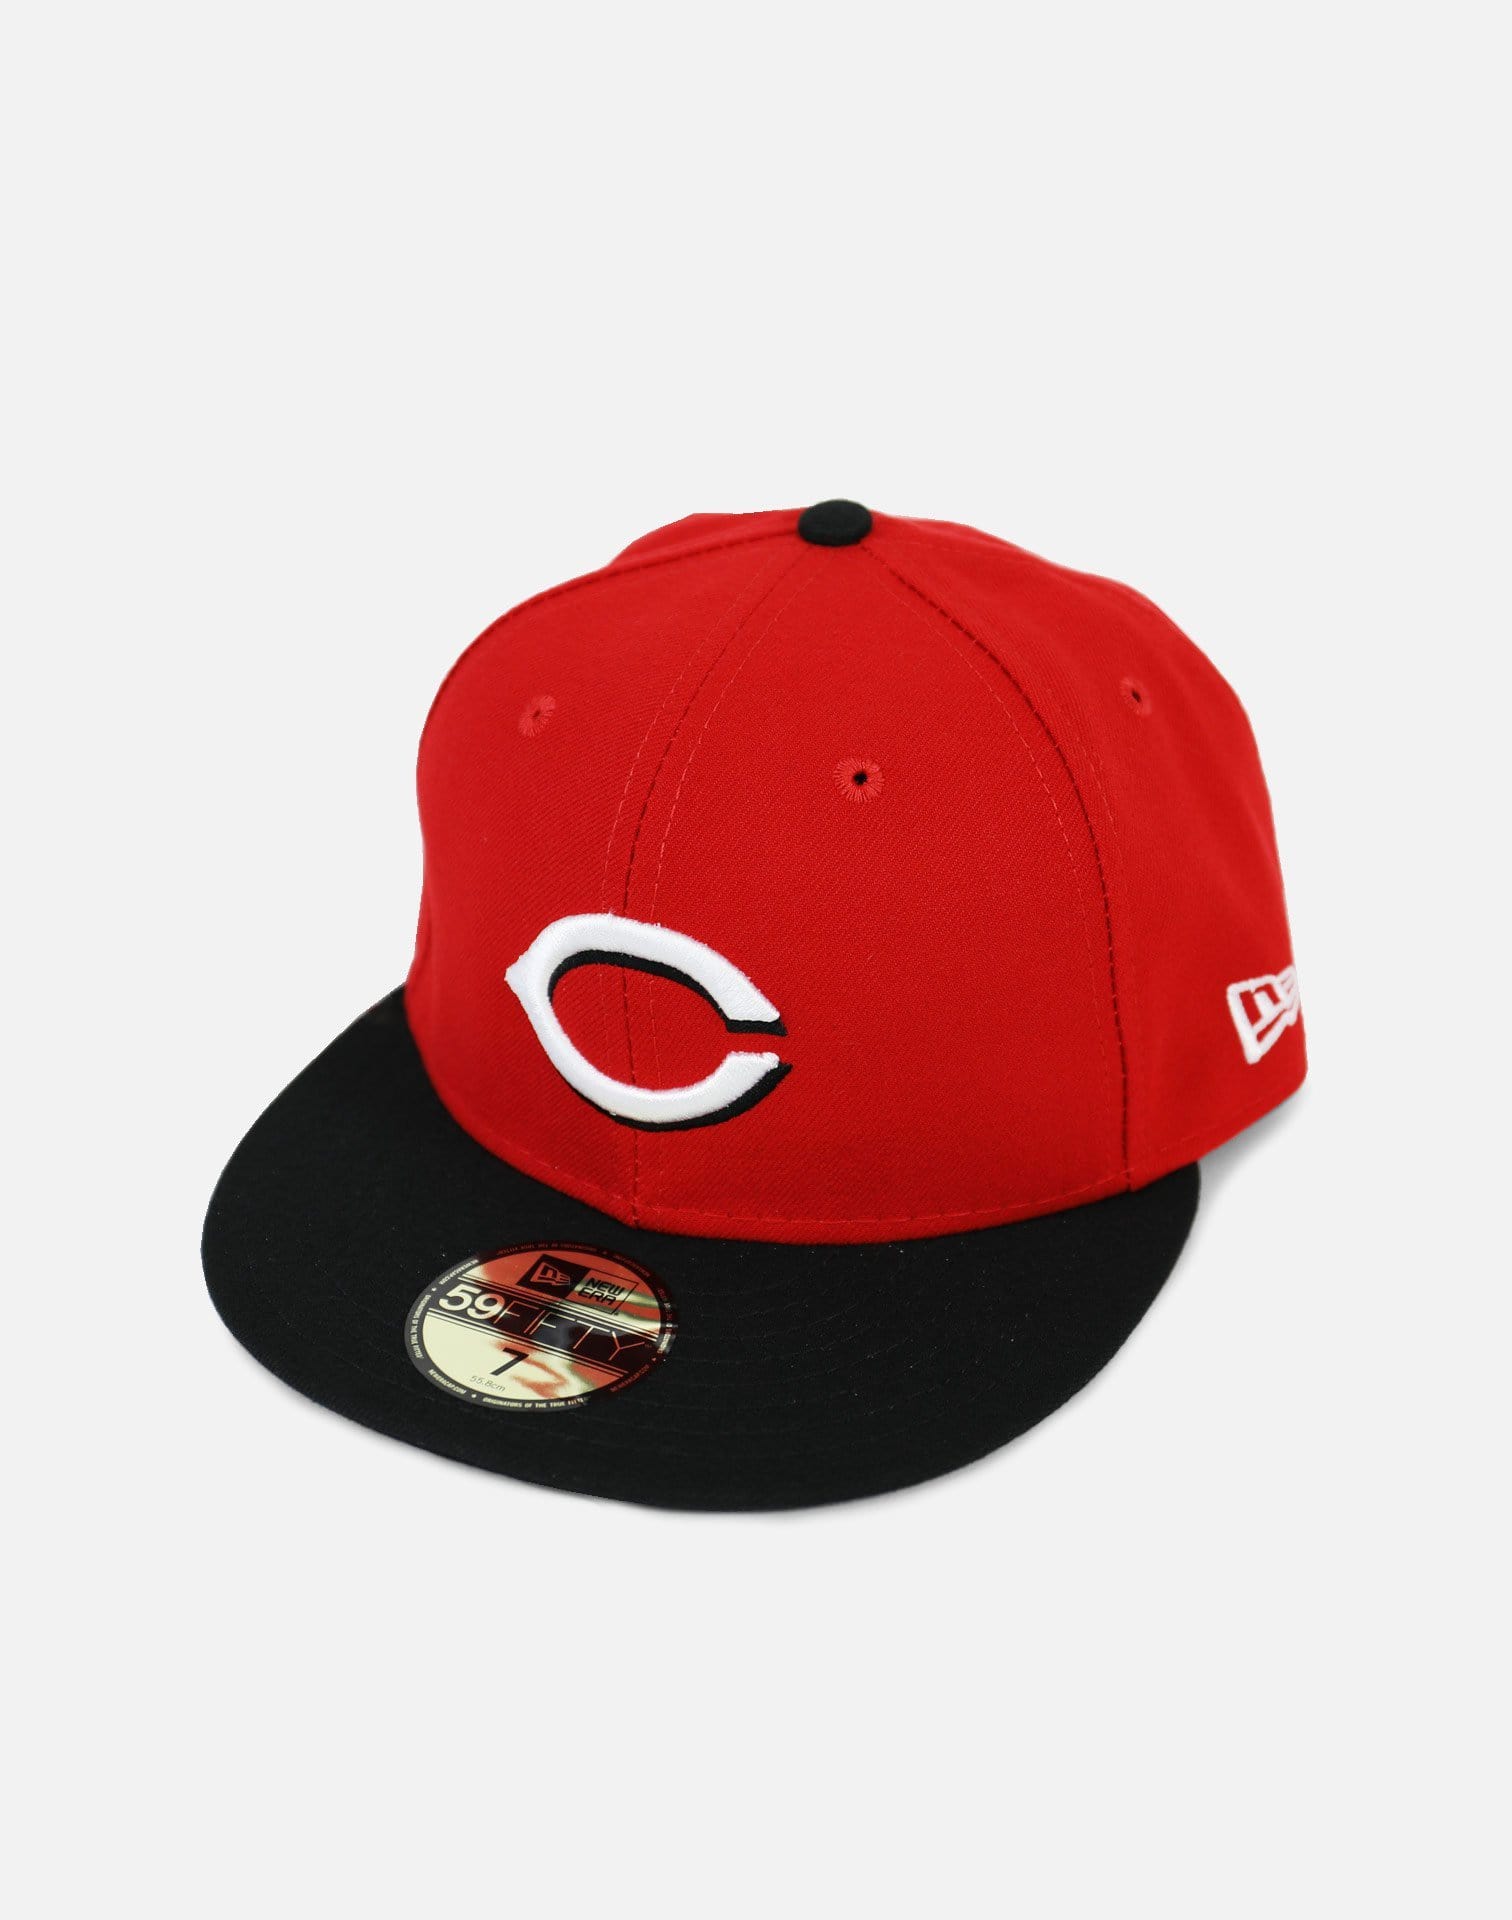 New Era Cincinnati Reds Authentic Fitted Hat (Red/Black)